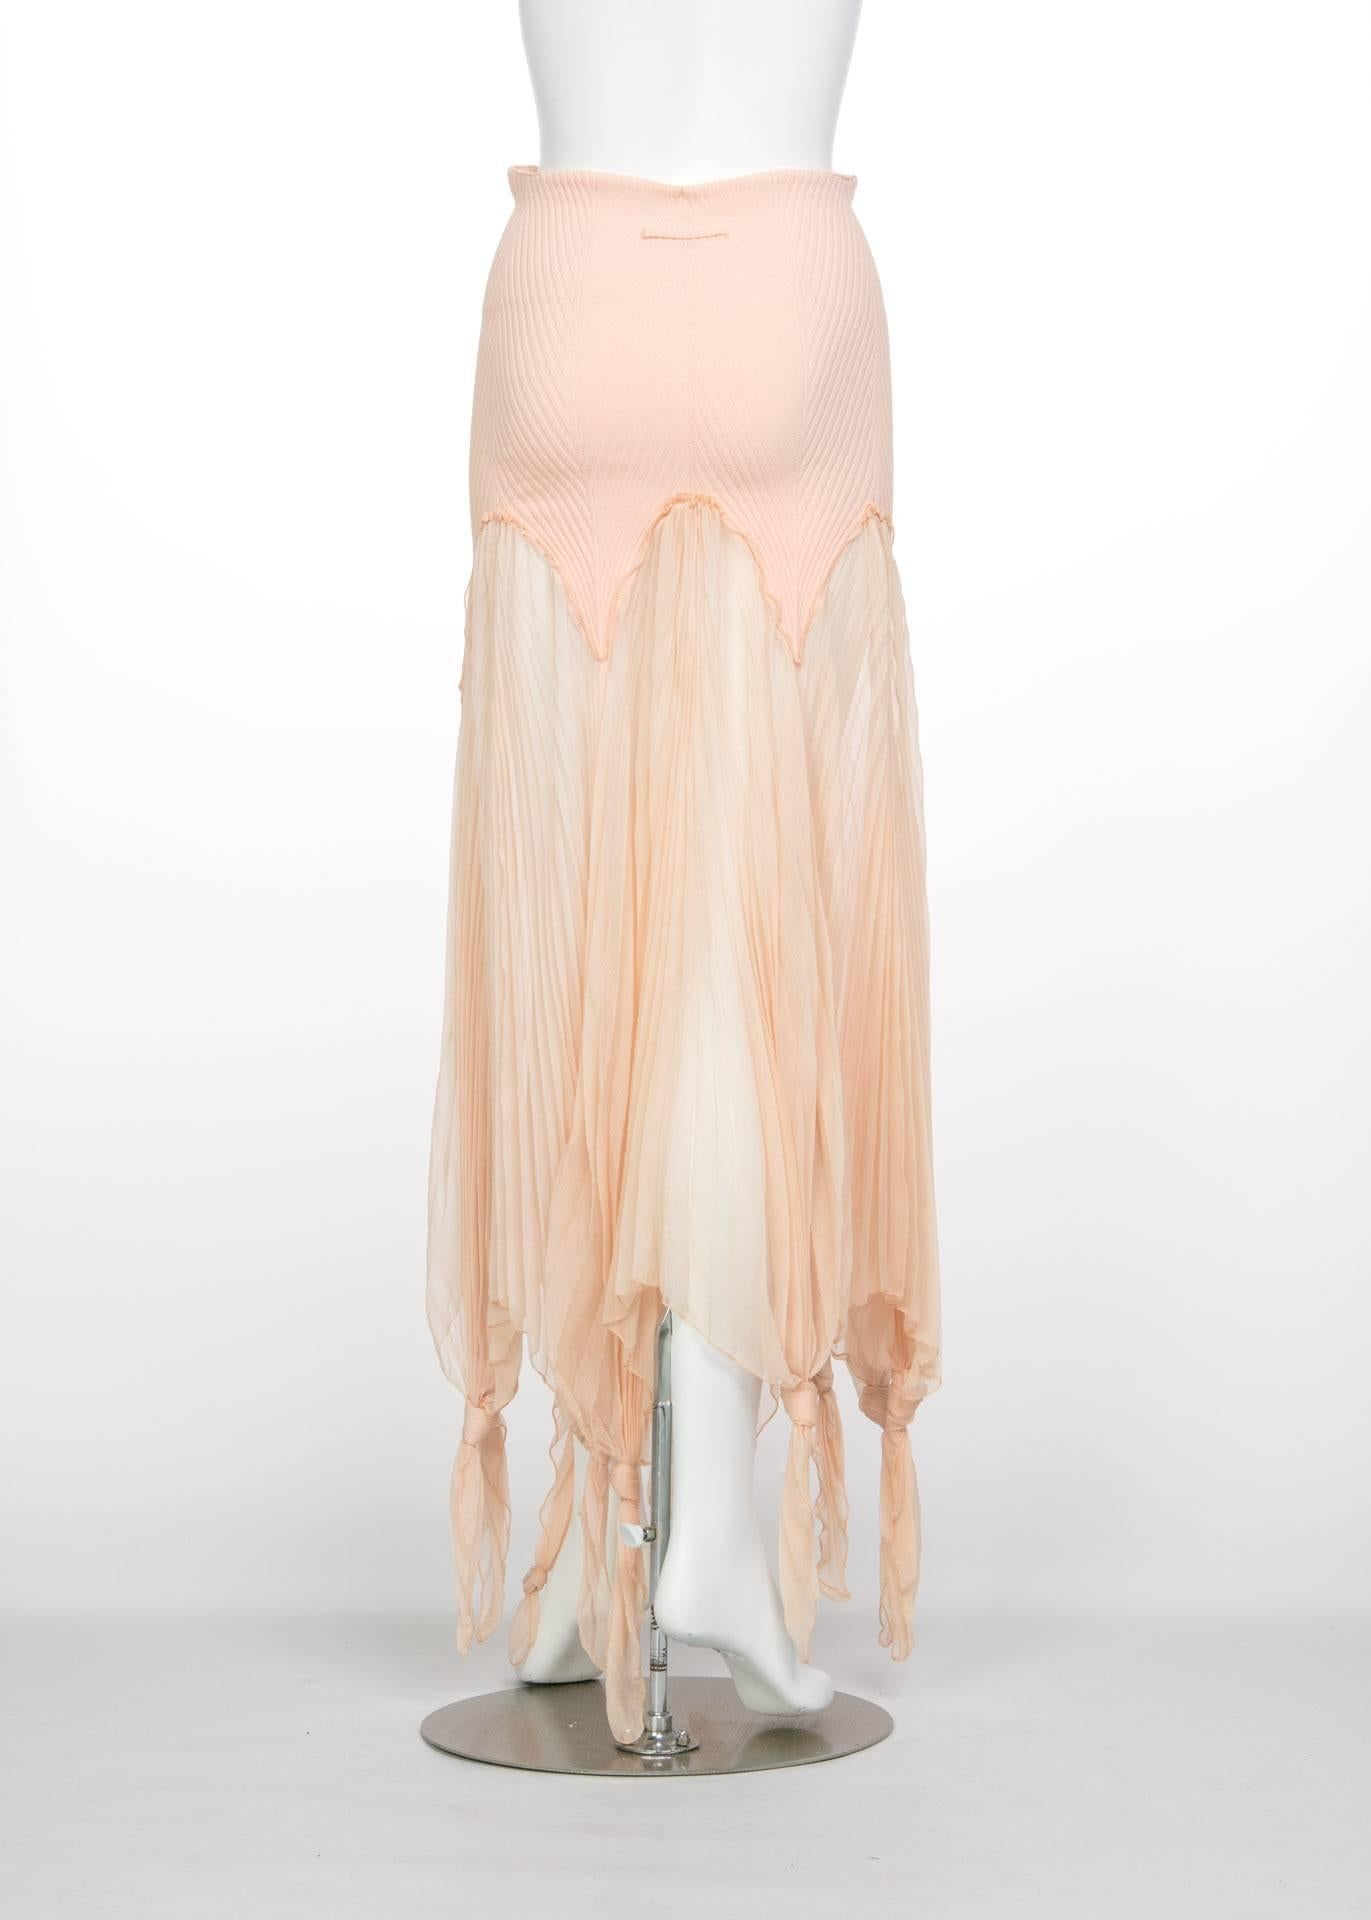 Jean Paul Gaultier Blush Crinkle Silk Chiffon Rib Knit Yoke Skirt, 2000s 2